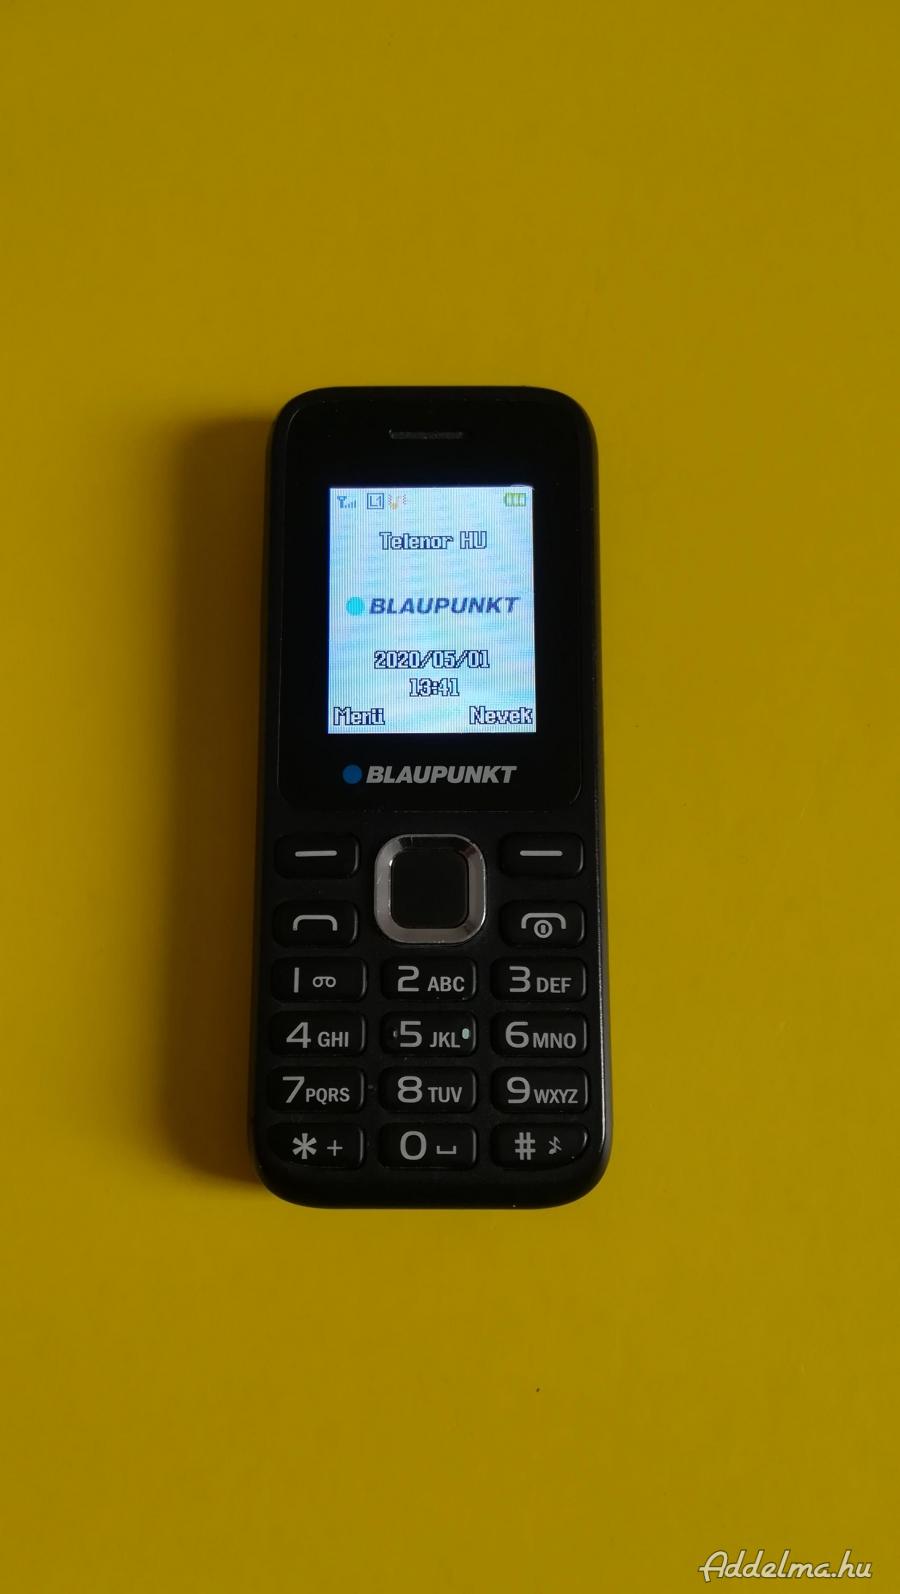  Blaupunkt FS 03 mobil, jó, telenoros.